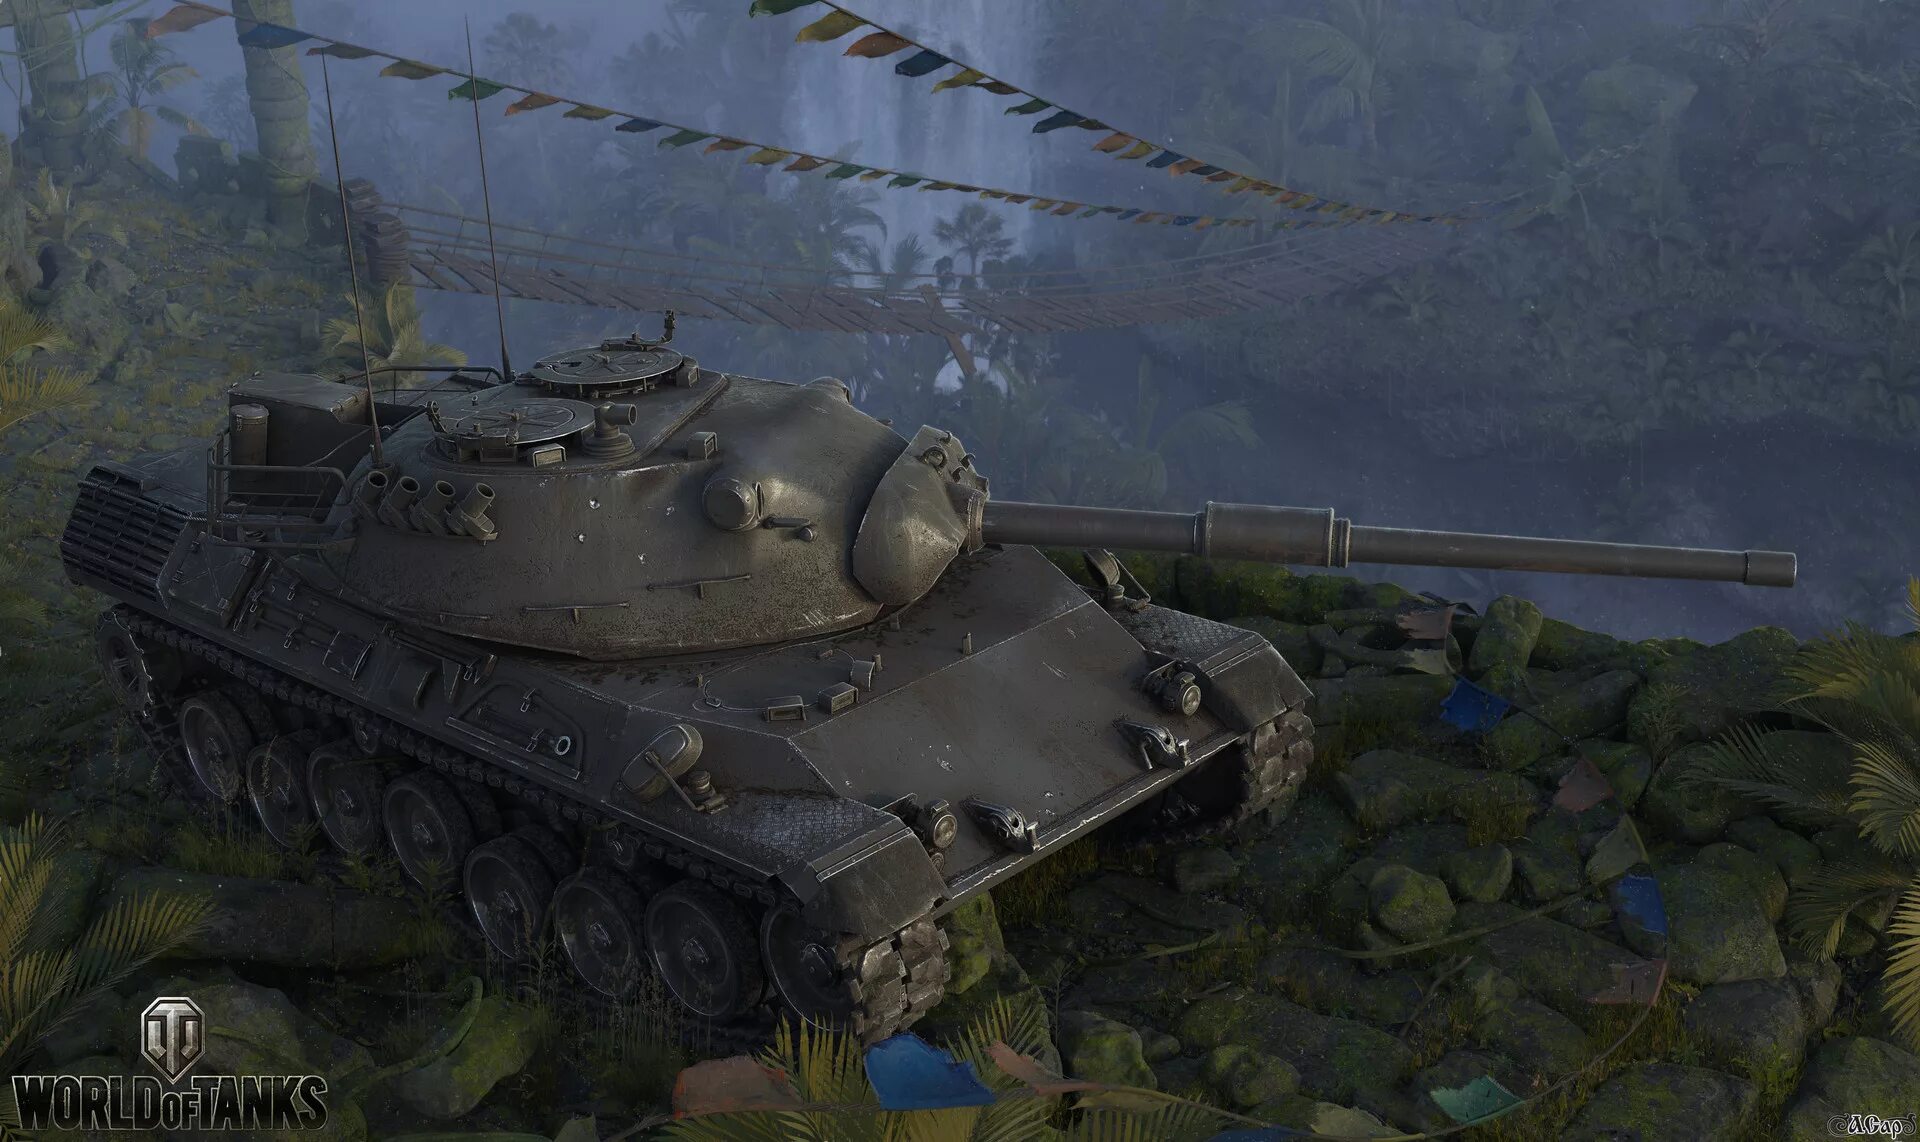 Wor 1. Леопард 1 World of Tanks. Леопард танк ворлд оф танк. Танк Leopard 1. Танк леопард 1 ворлд оф танкс.